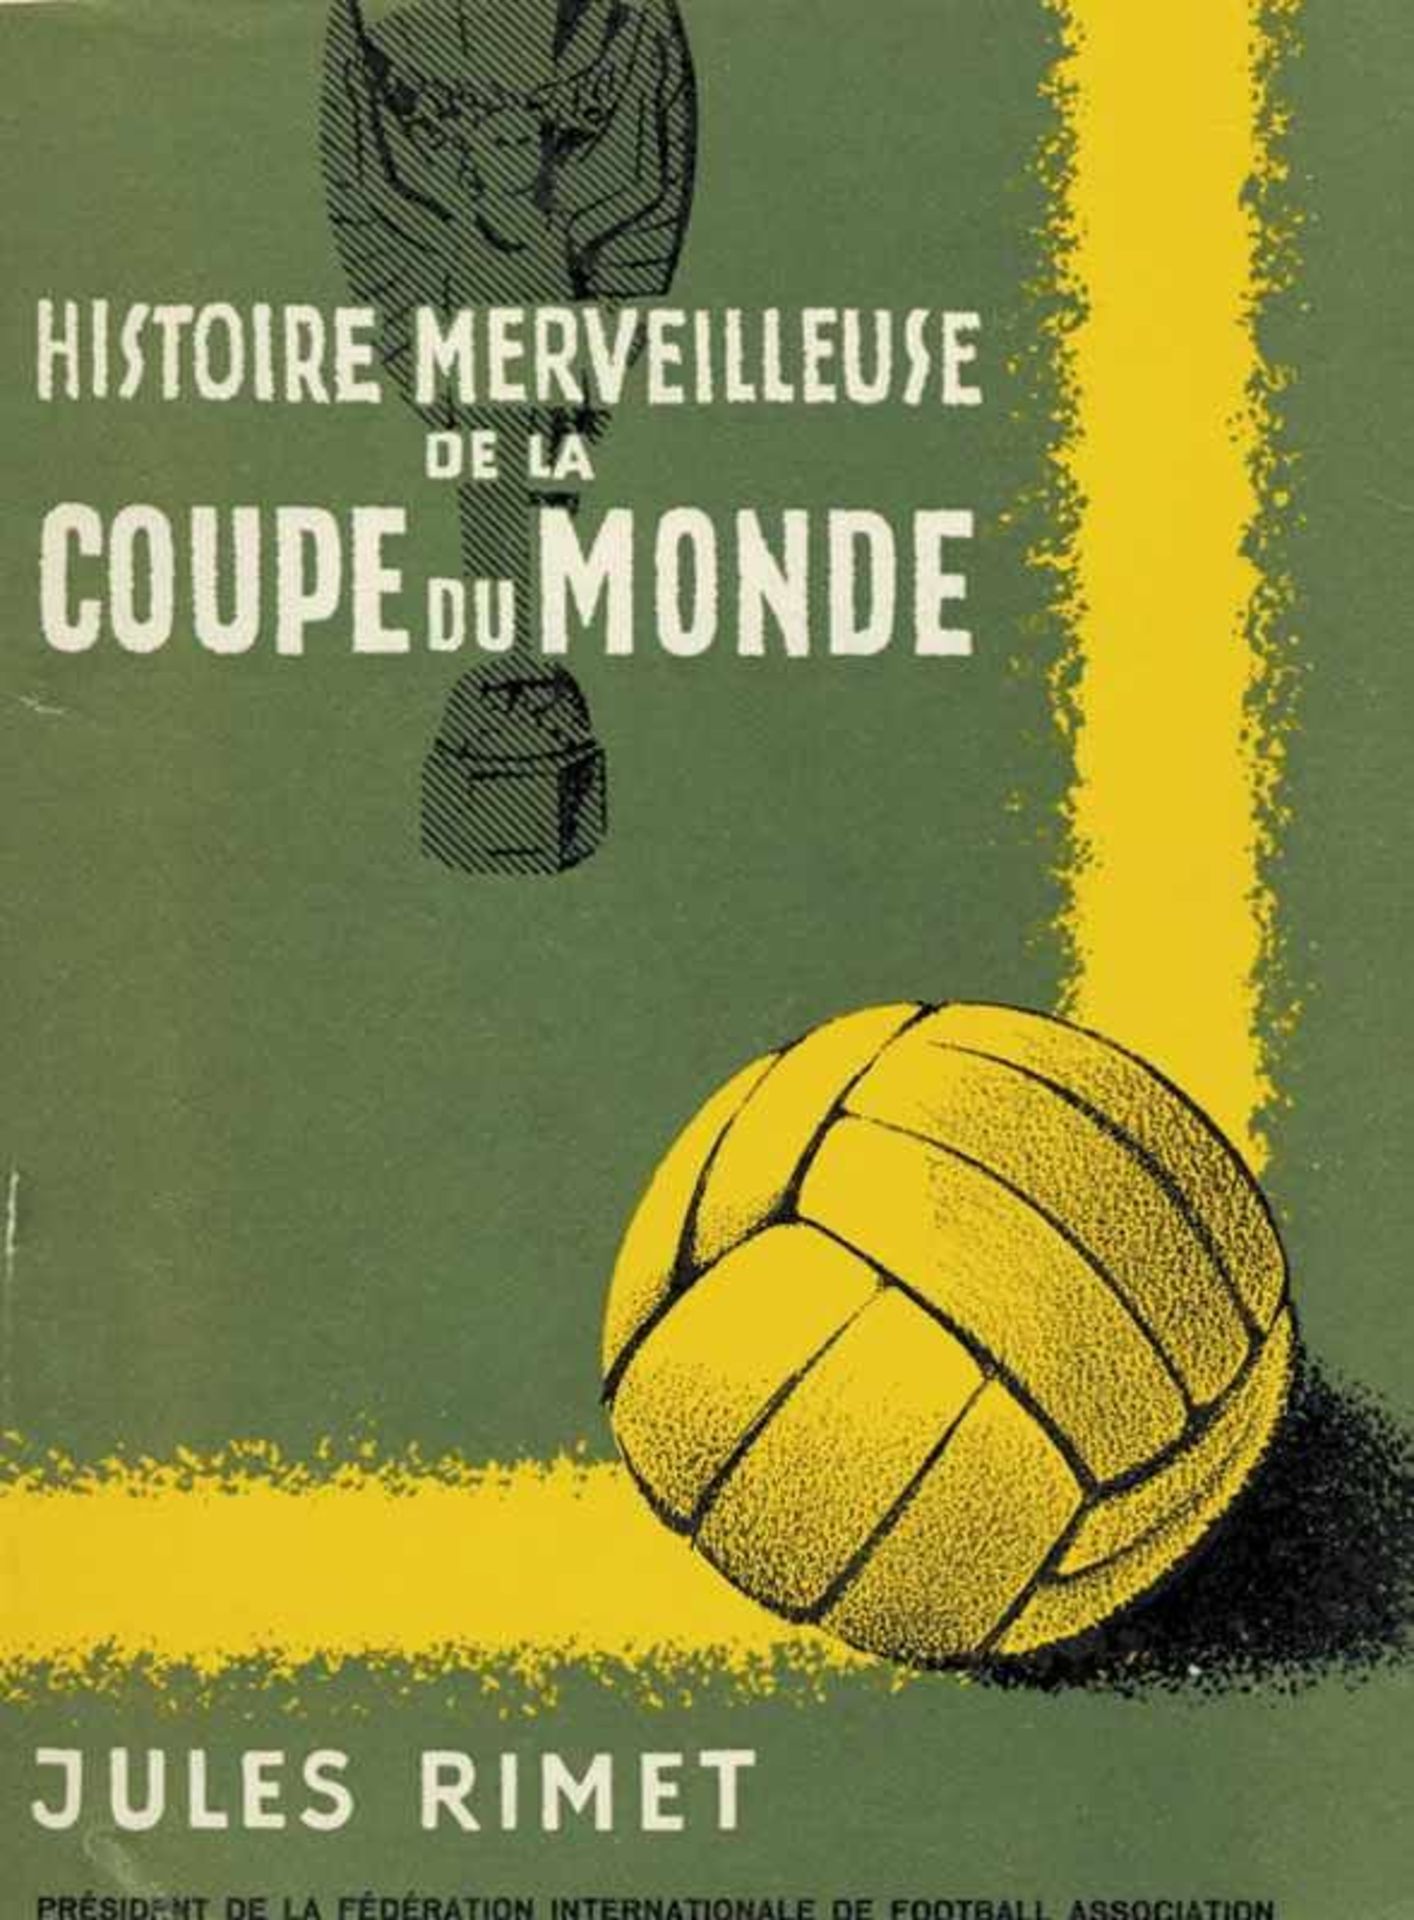 World Cup 1954 - Rare Booklet of Jules Rimet - Jules Rimet's story of football 1954 (FRENCH). 